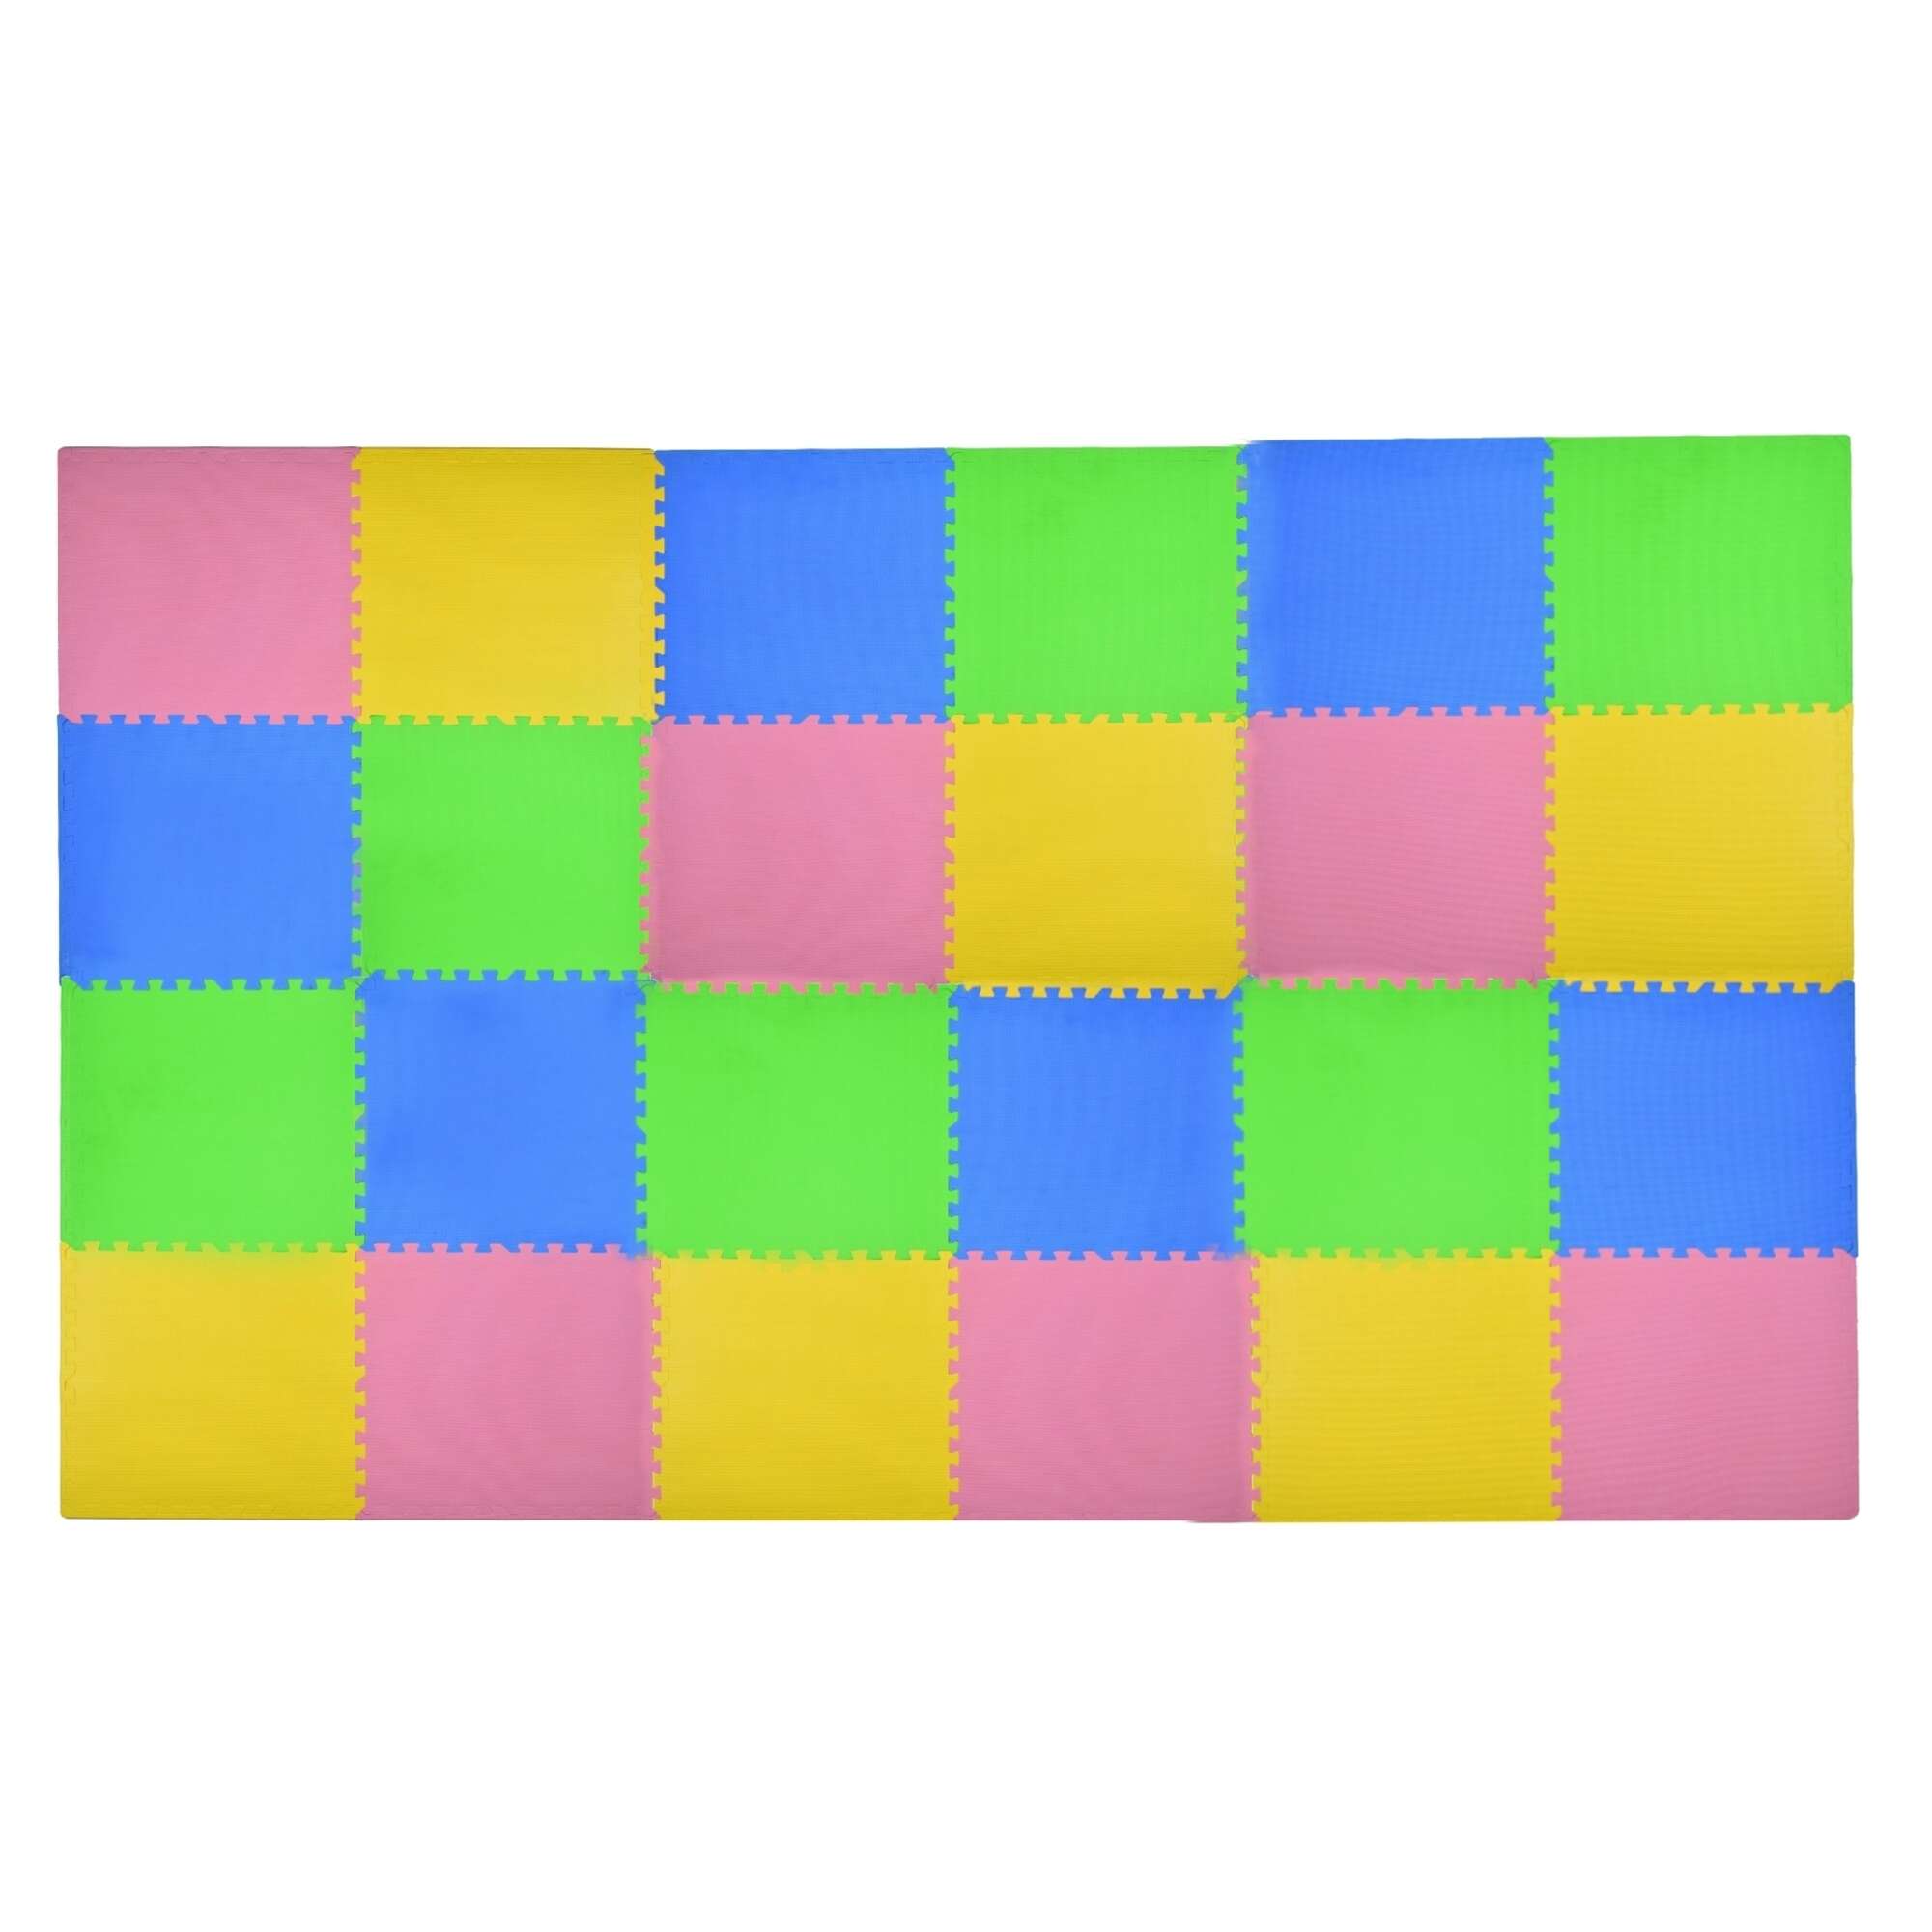 Humbi mata piankowa puzzle piankowe fitness wodoodporne pod basen 24 szt. kolorowa 360 x 240 x 1 cm